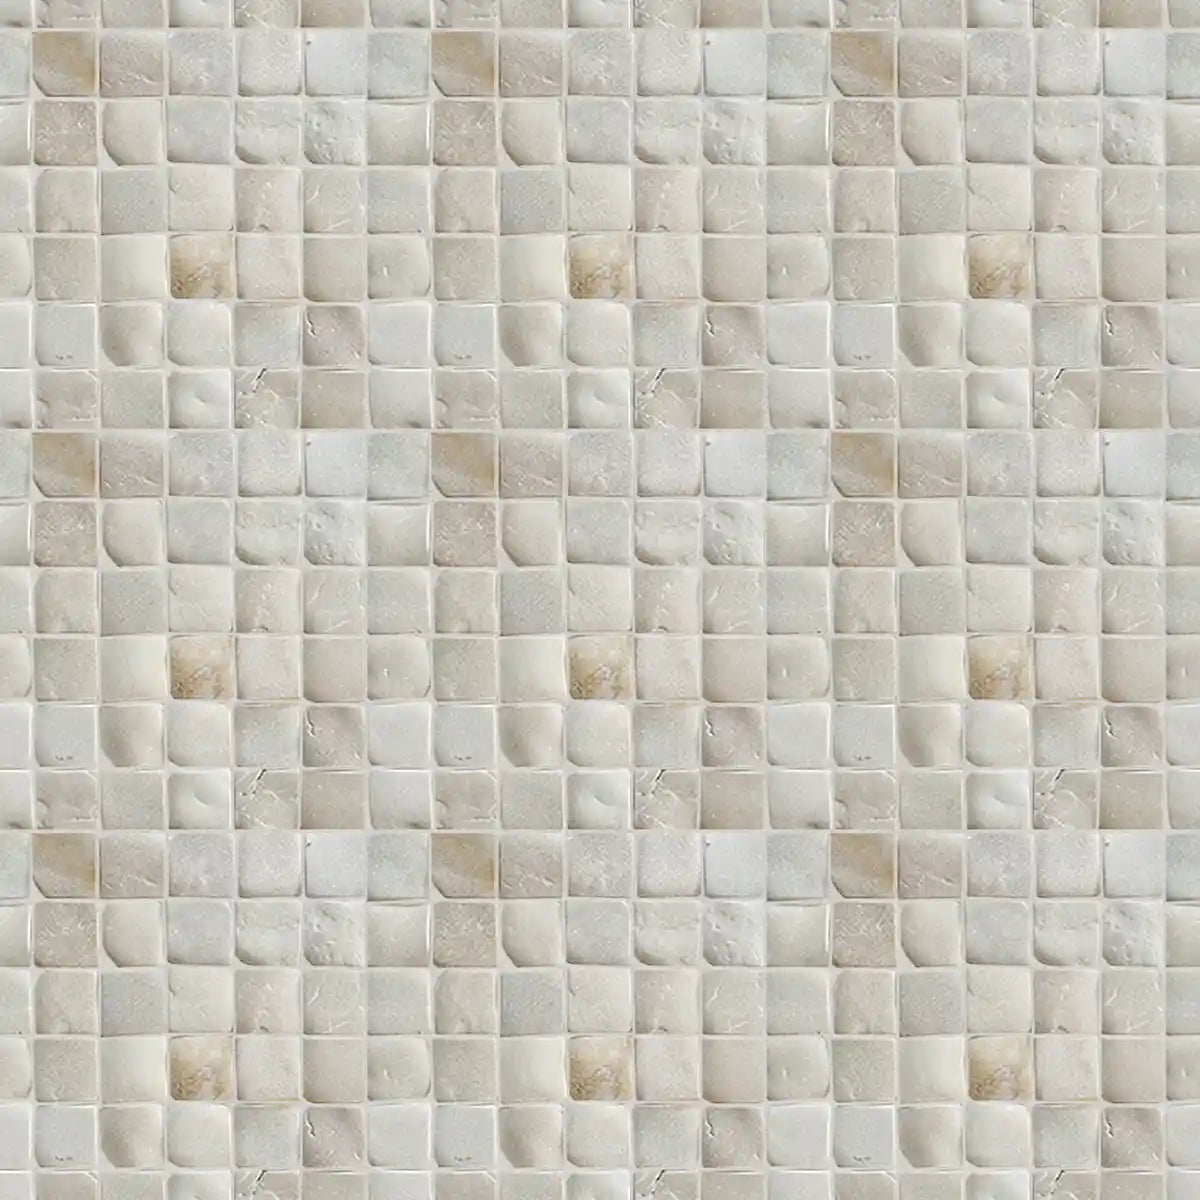 Tan Stone Mosaic Tile for Wall, Molar 5 Natural Stone Floor Tile